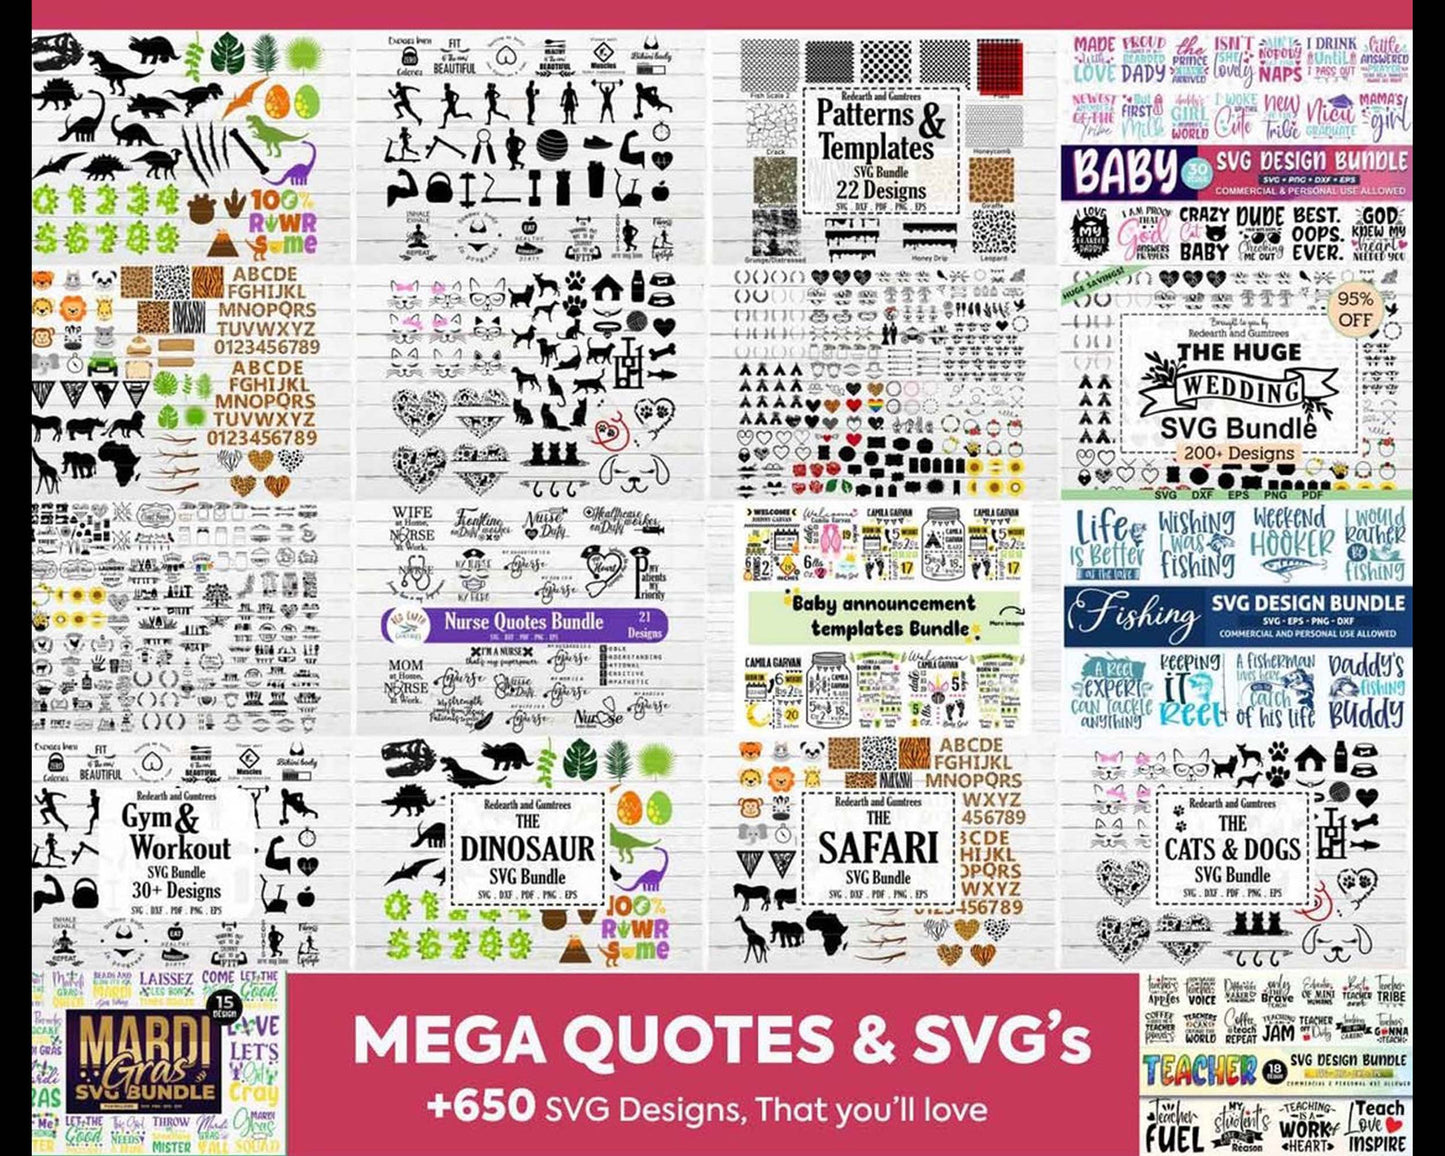 The Ultimate Giga Bundle svg, Mega bundle svg, 200.000 unique designs almost everything included, for Cricut, Silhouette, digital, file cut